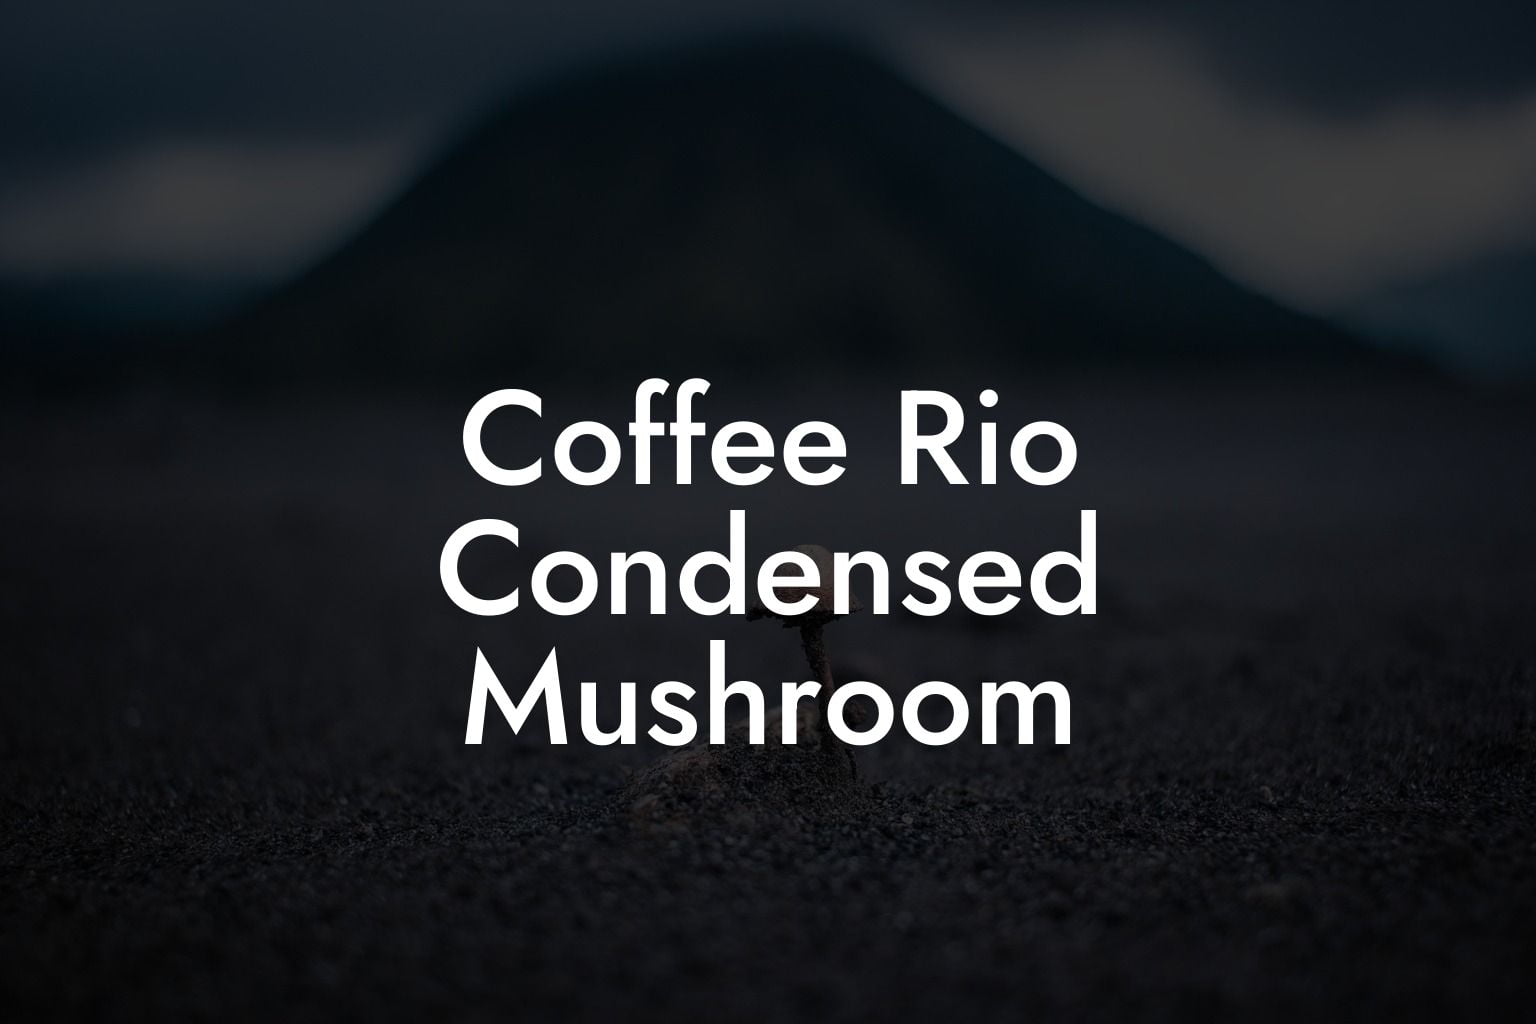 Coffee Rio Condensed Mushroom